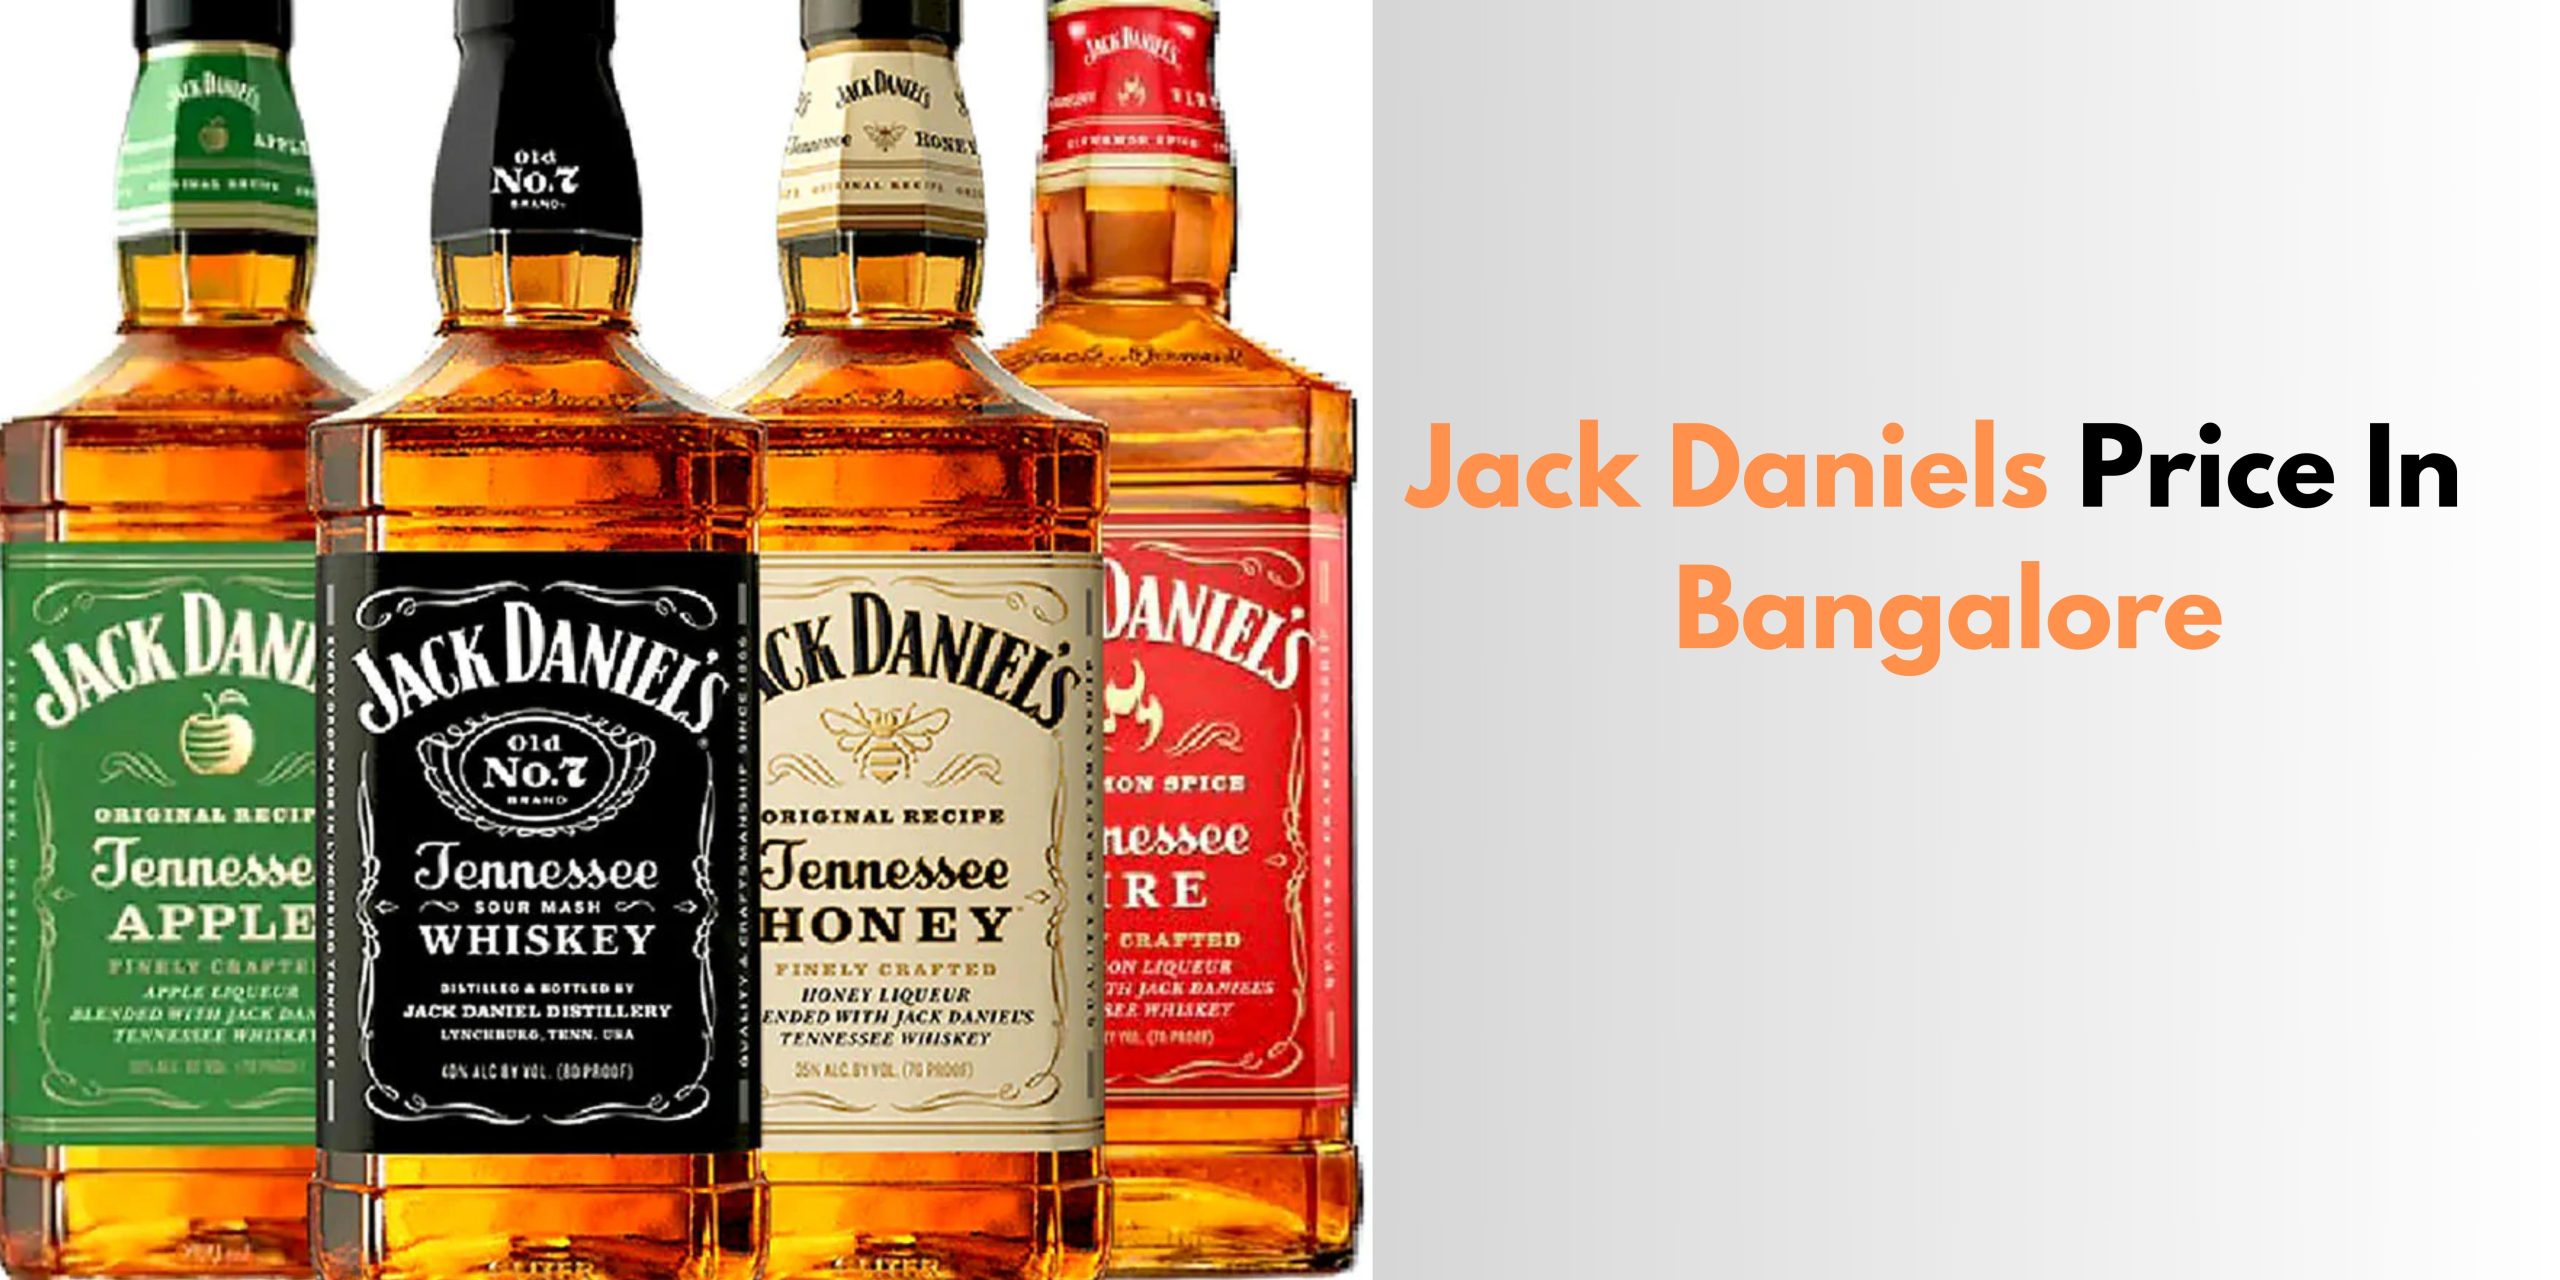 Jack Daniel's Price In Bangalore